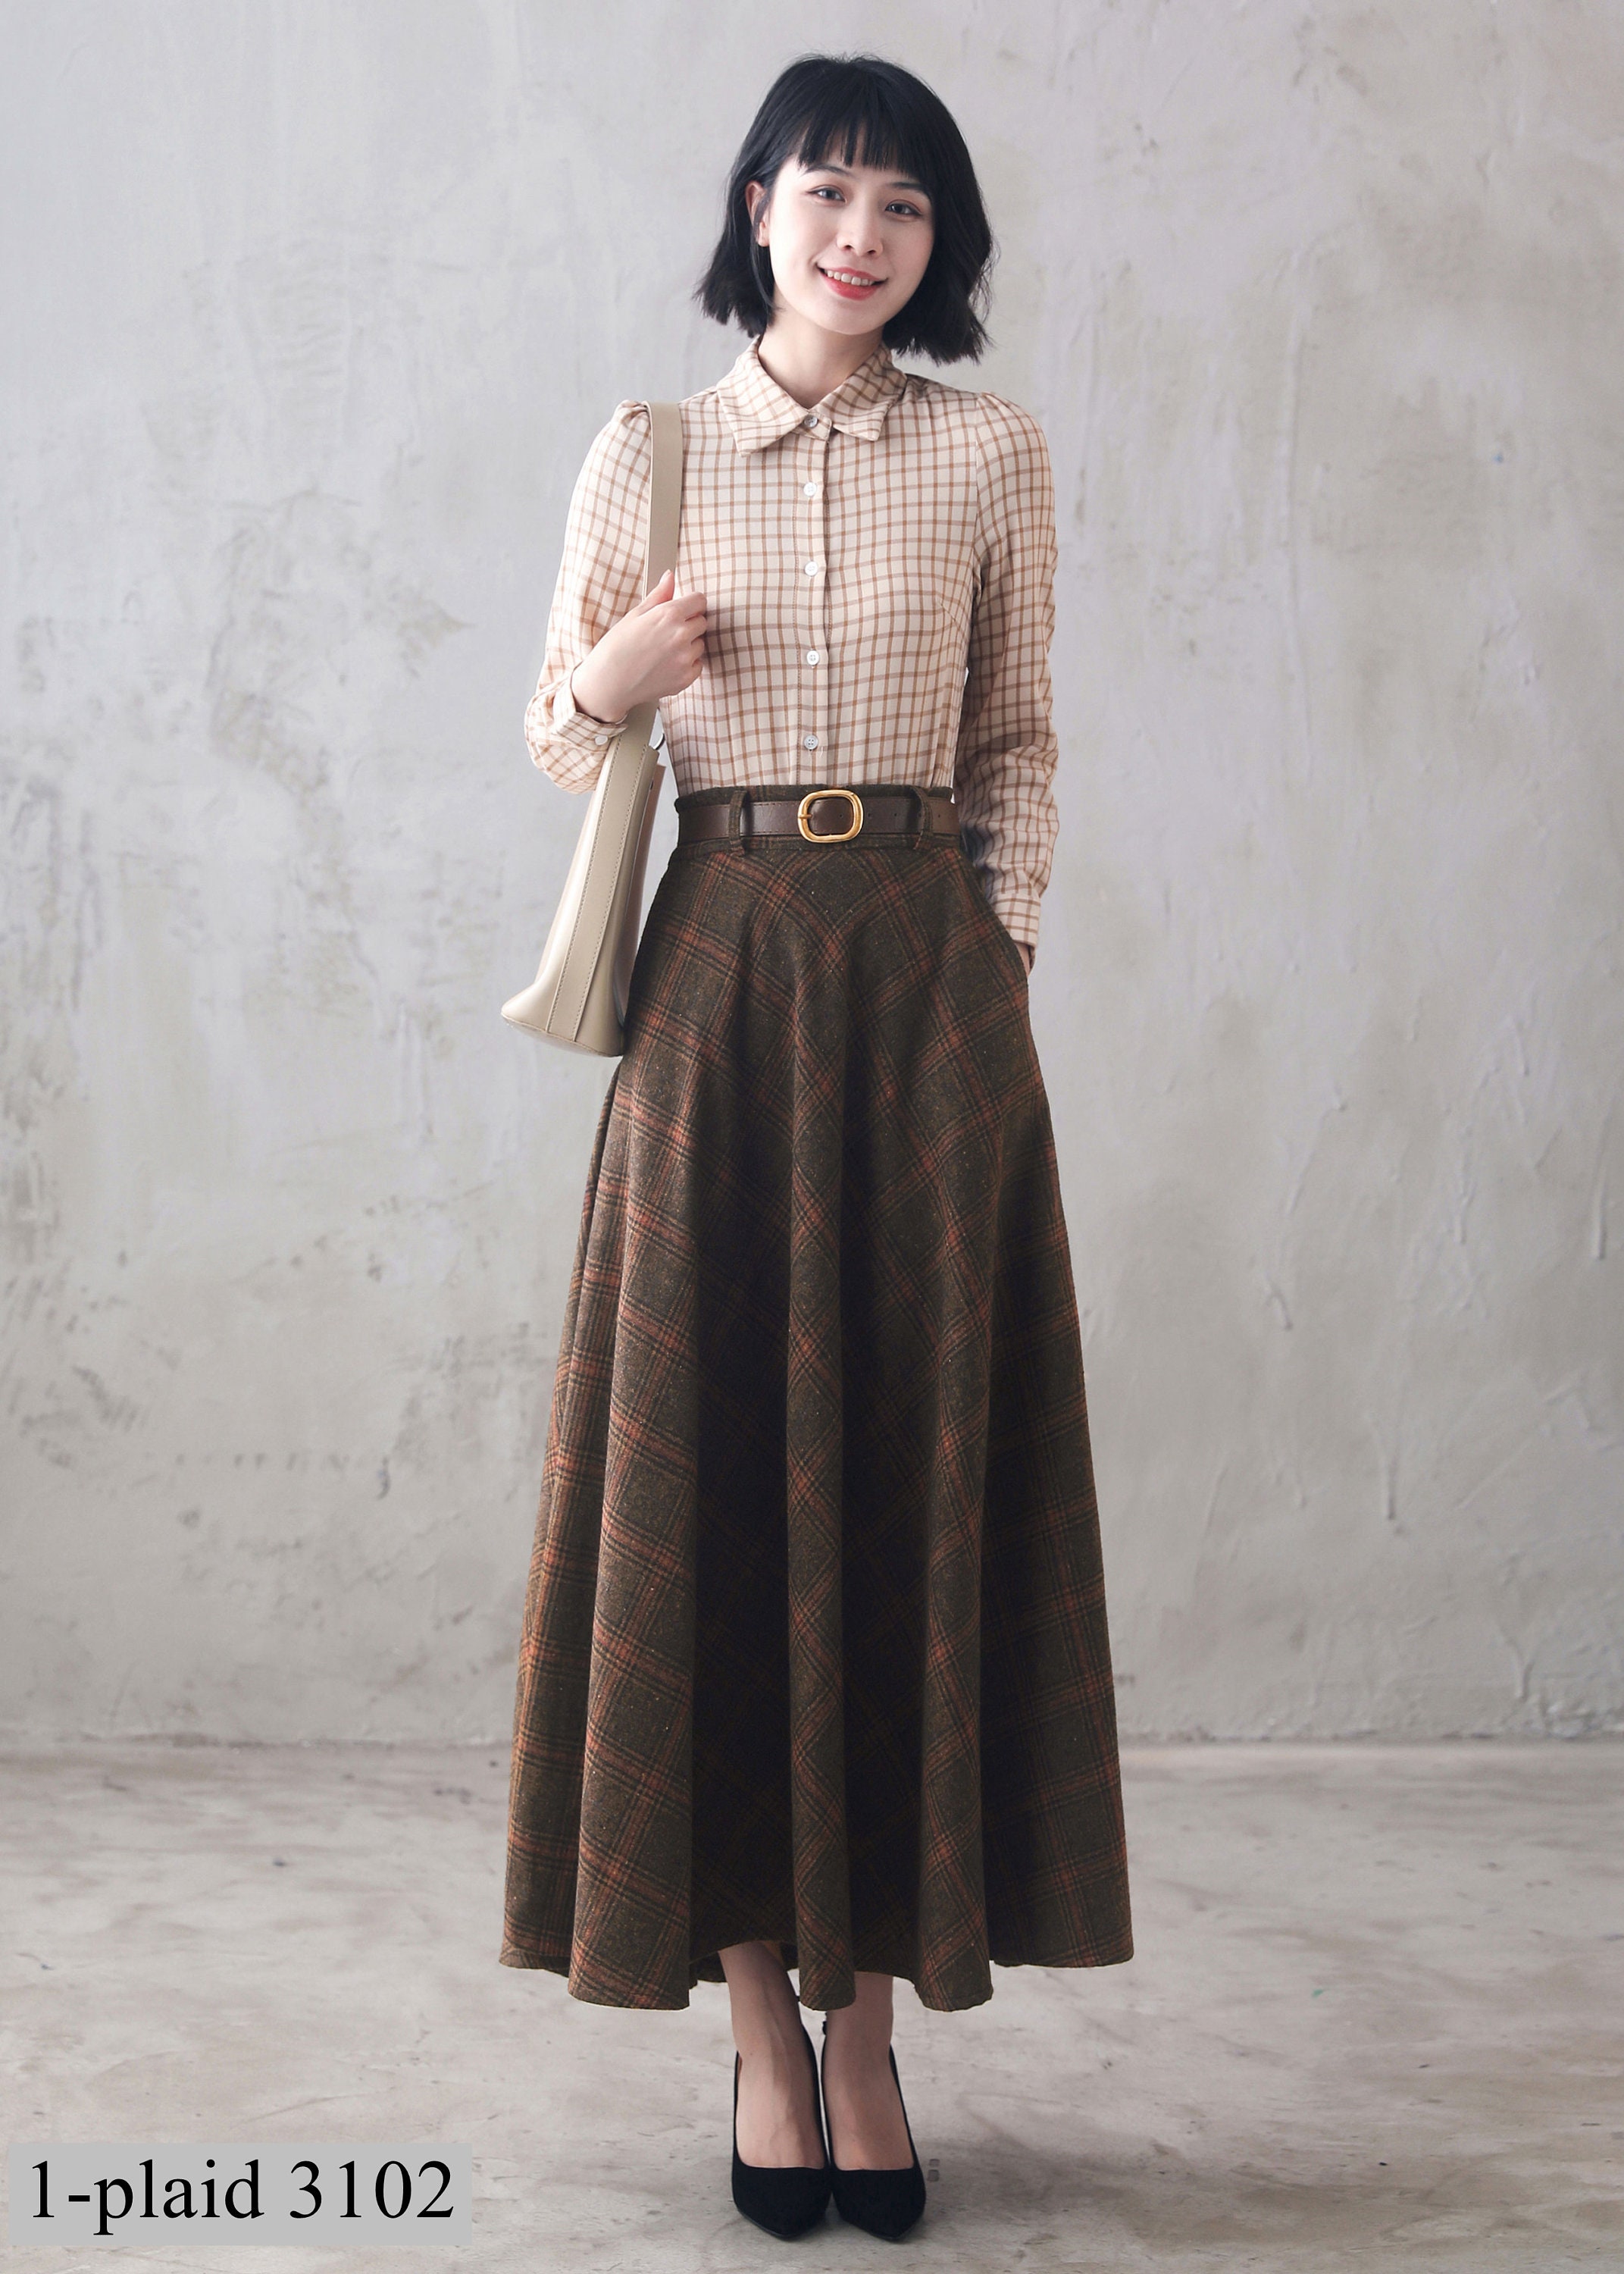 Women's Long Tartan Plaid Wool Skirt High Elastic Waist | Etsy